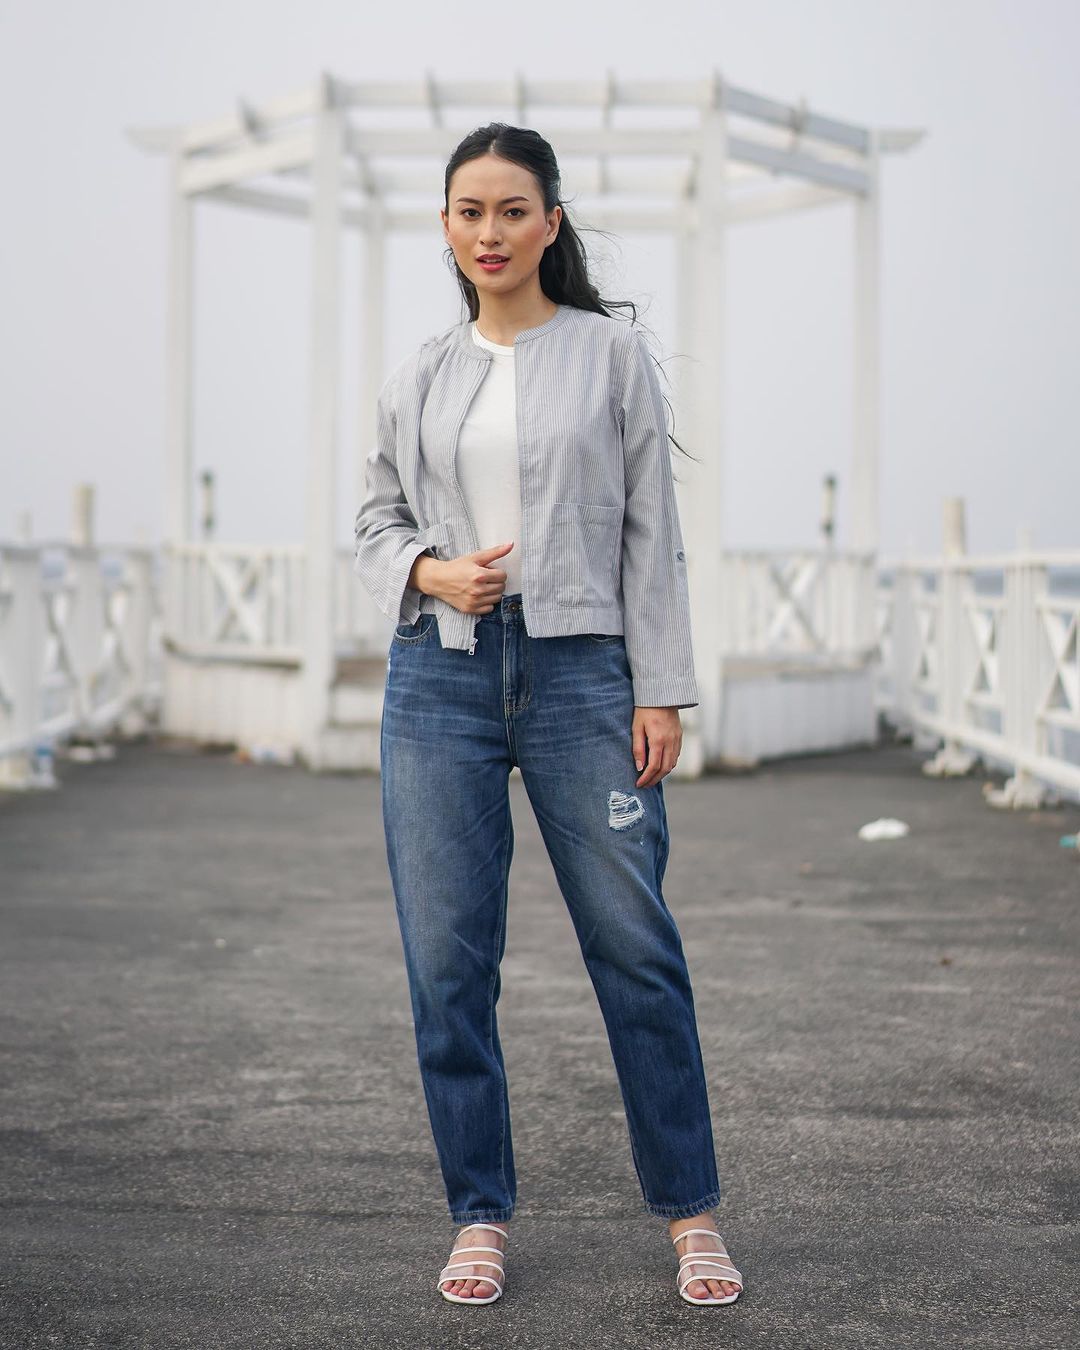 Model Celana Jeans Terkini Untuk Wanita - Boyfriend Jeans